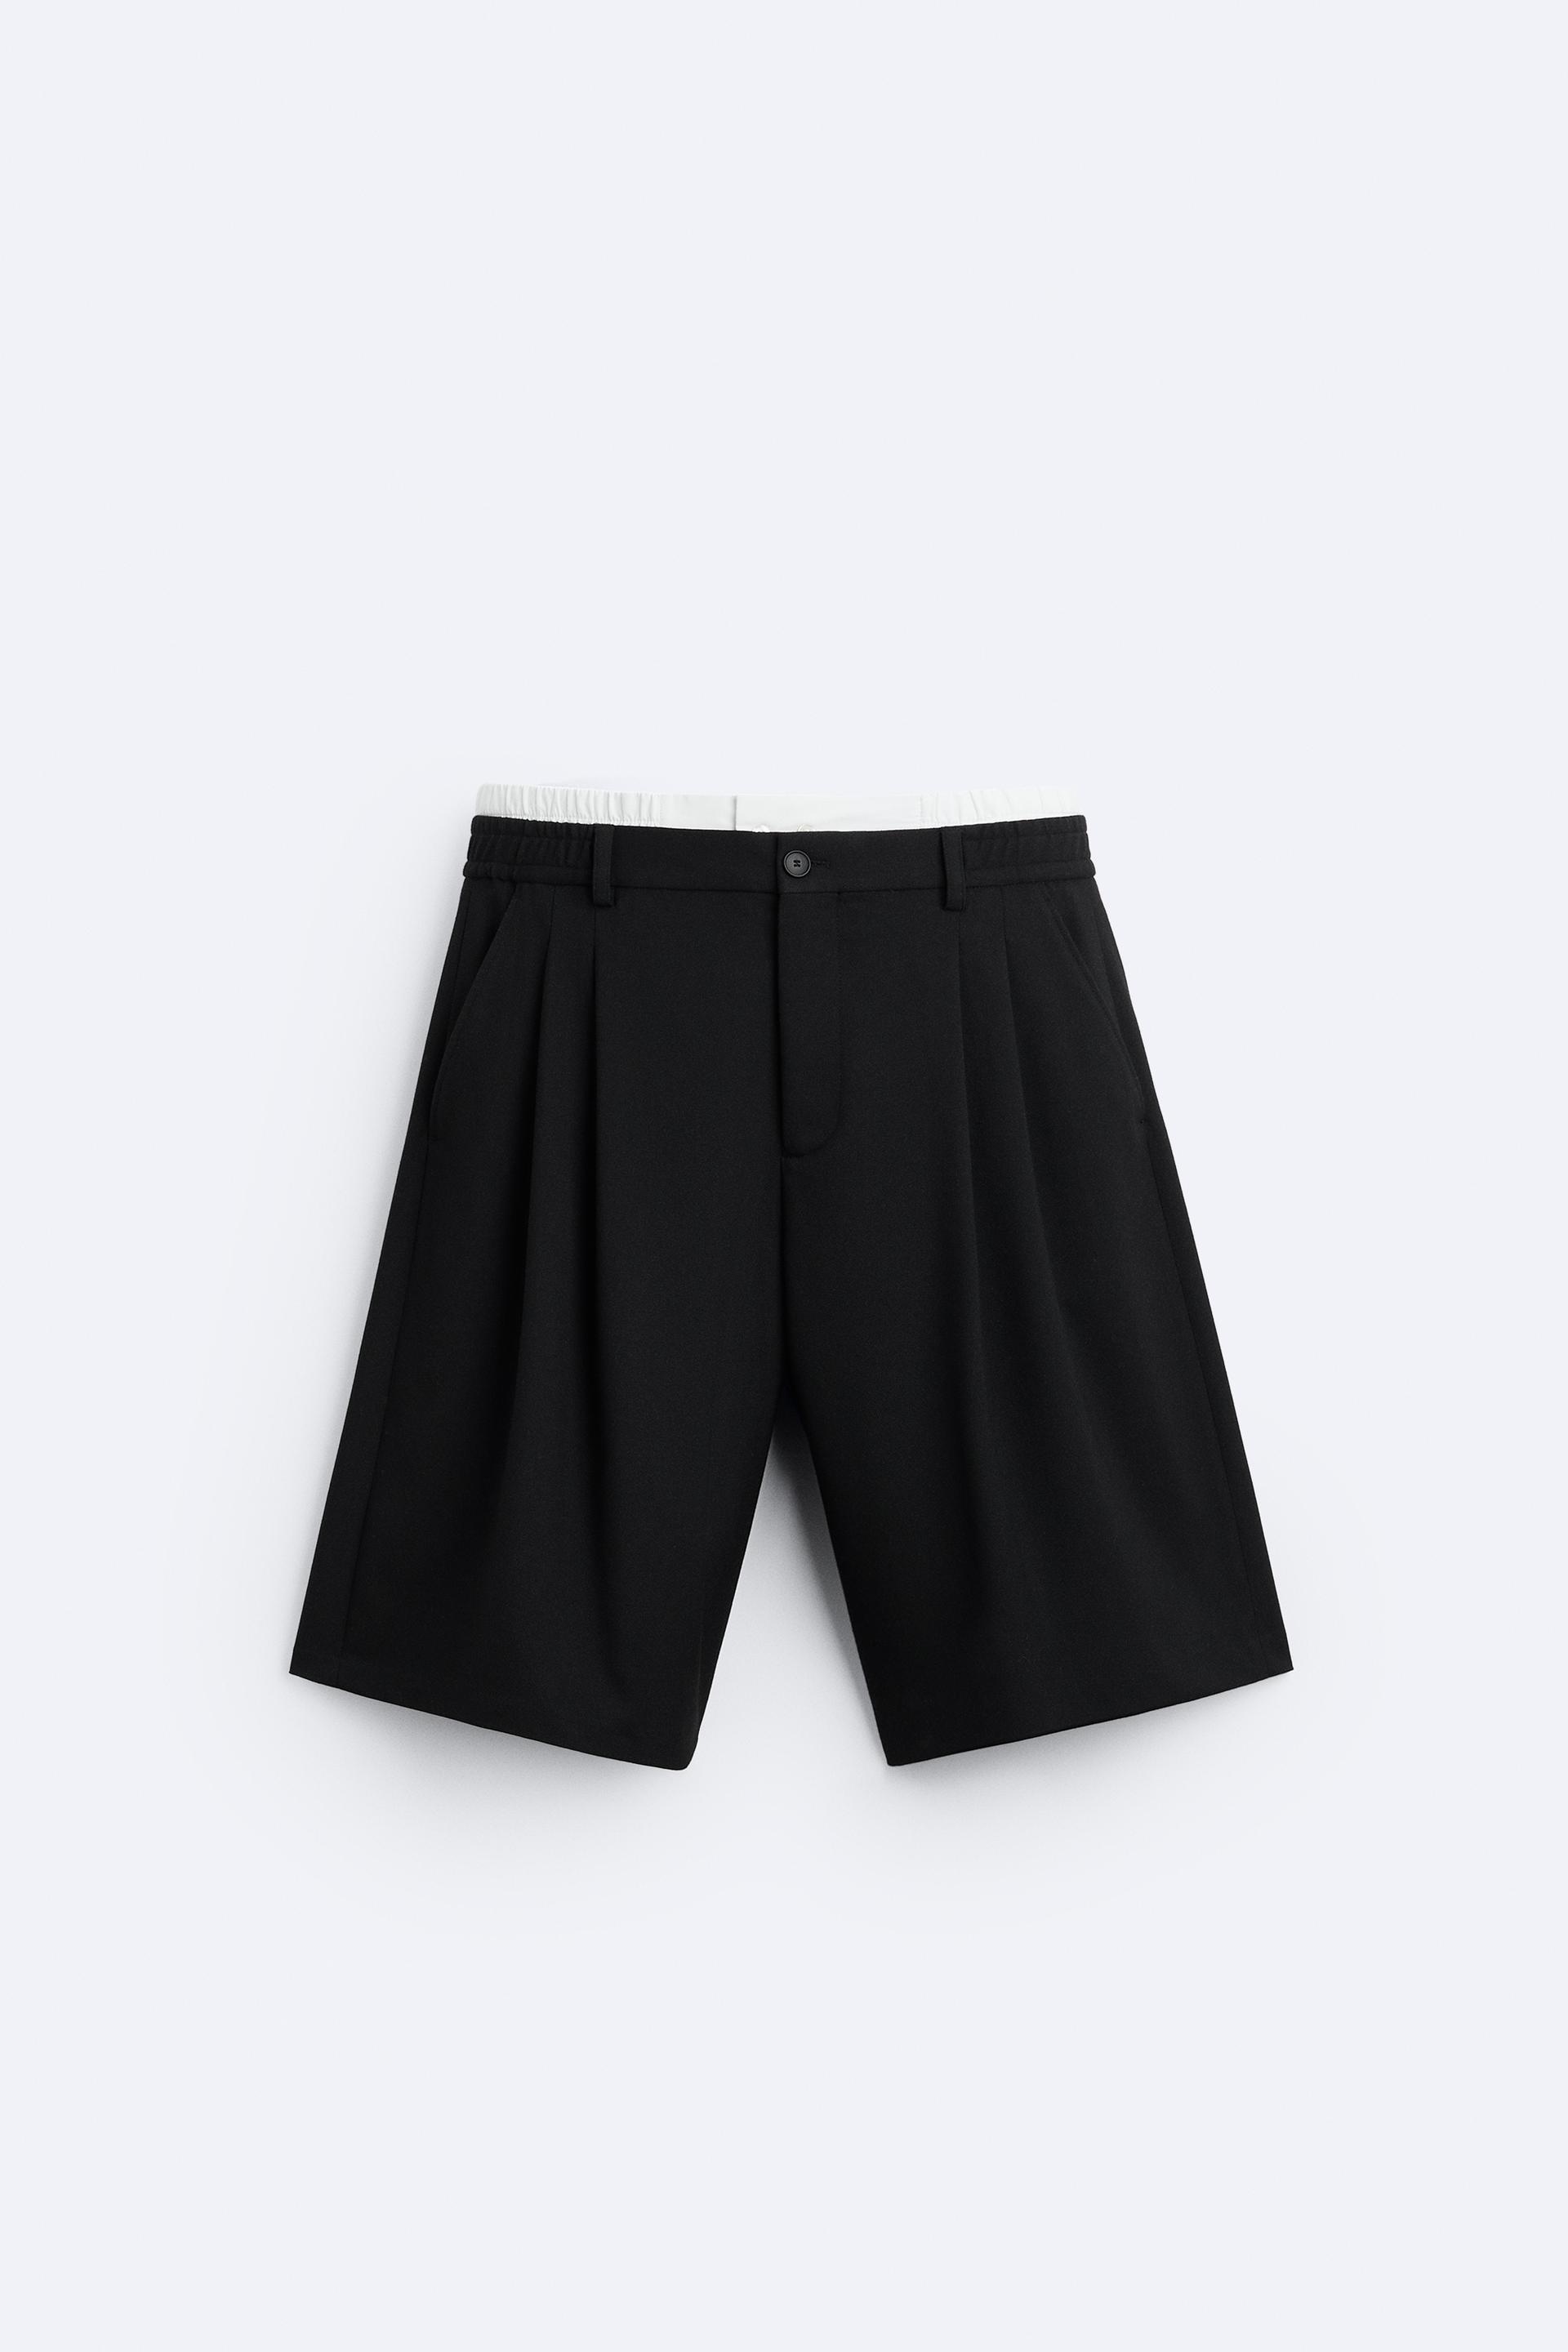 ZARA MEN MULTICOLOR PRINTED BOXERS ELASTIC WAISTBAND Shorts Size L